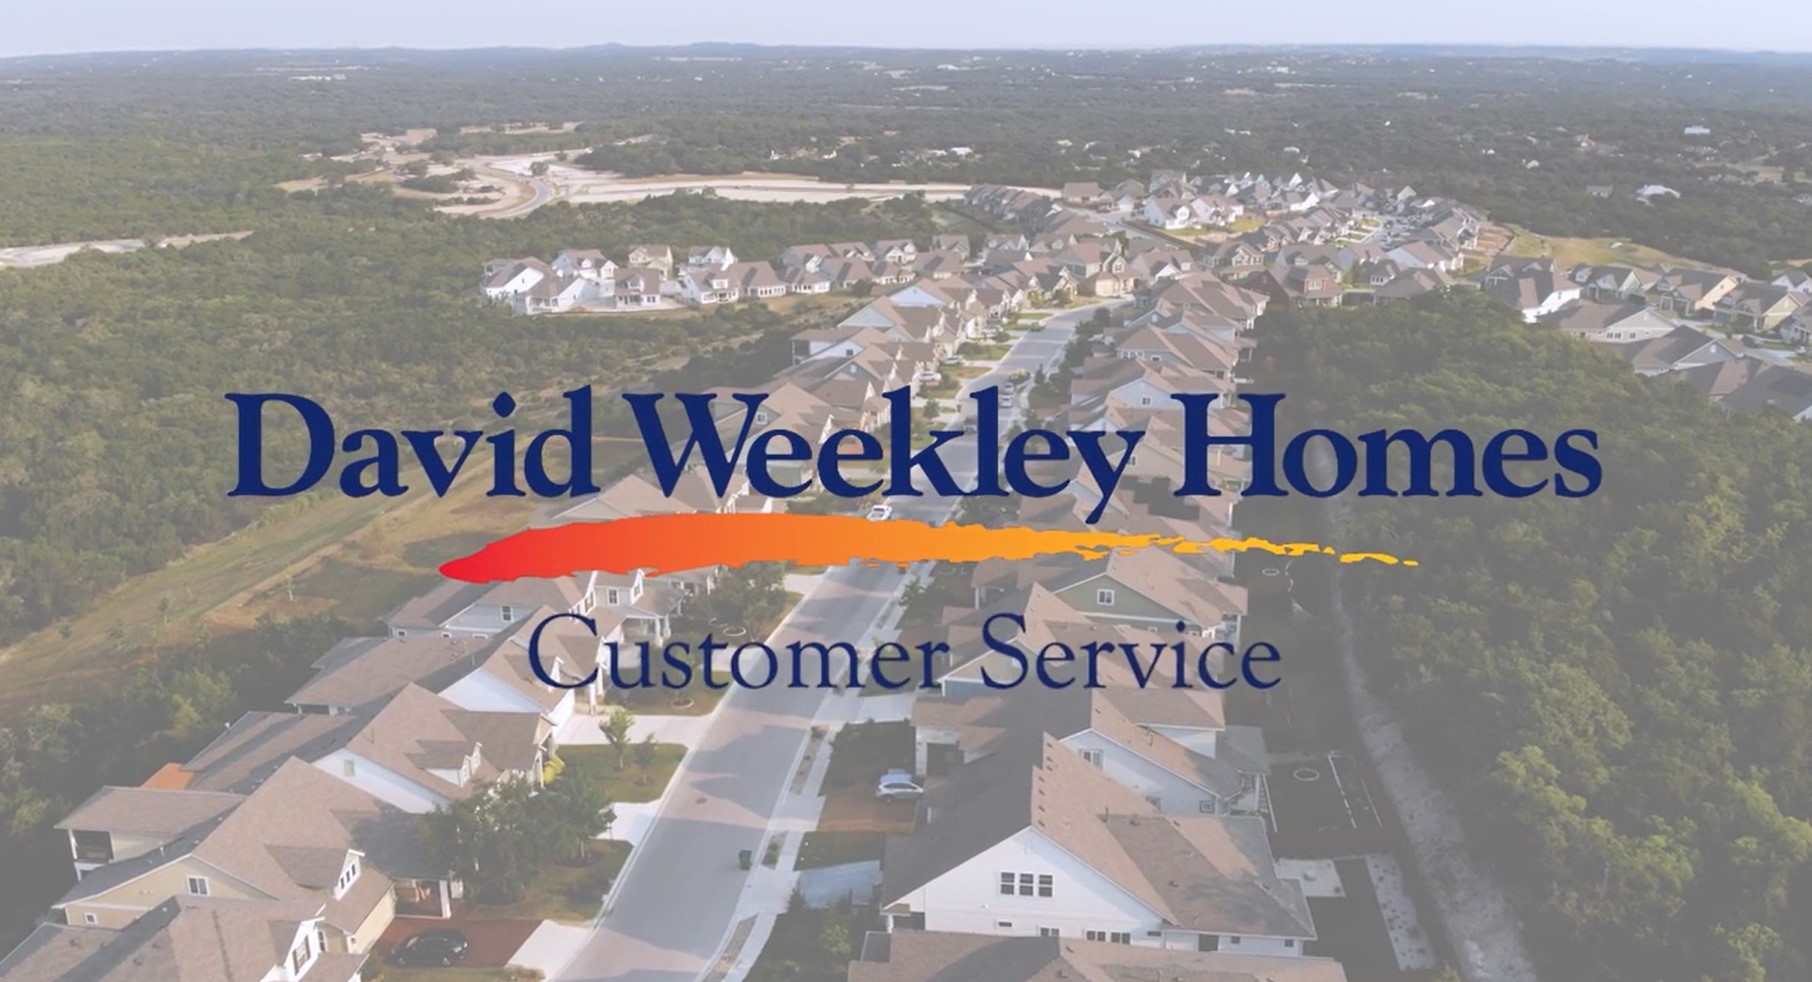 David Weekley Homes Customer Service Video